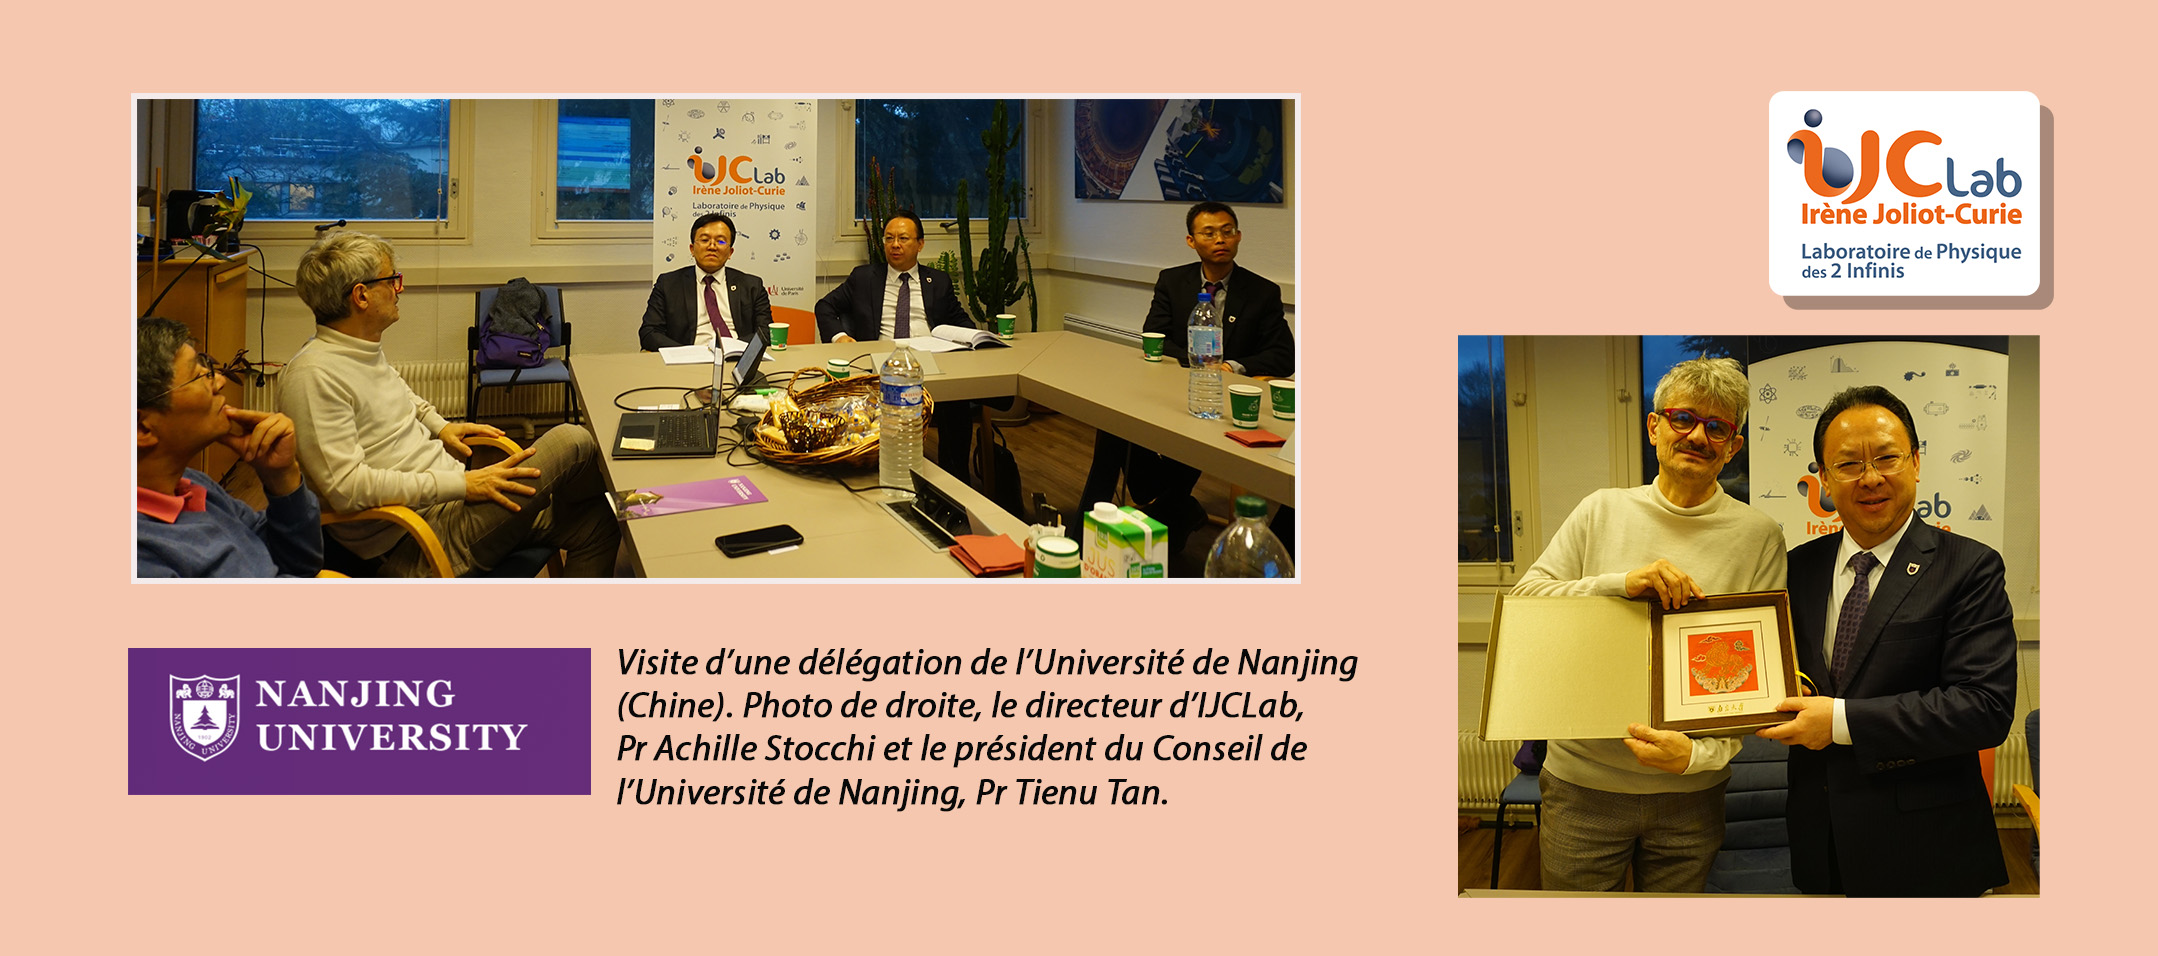 Visit of the Nanjing University delegation